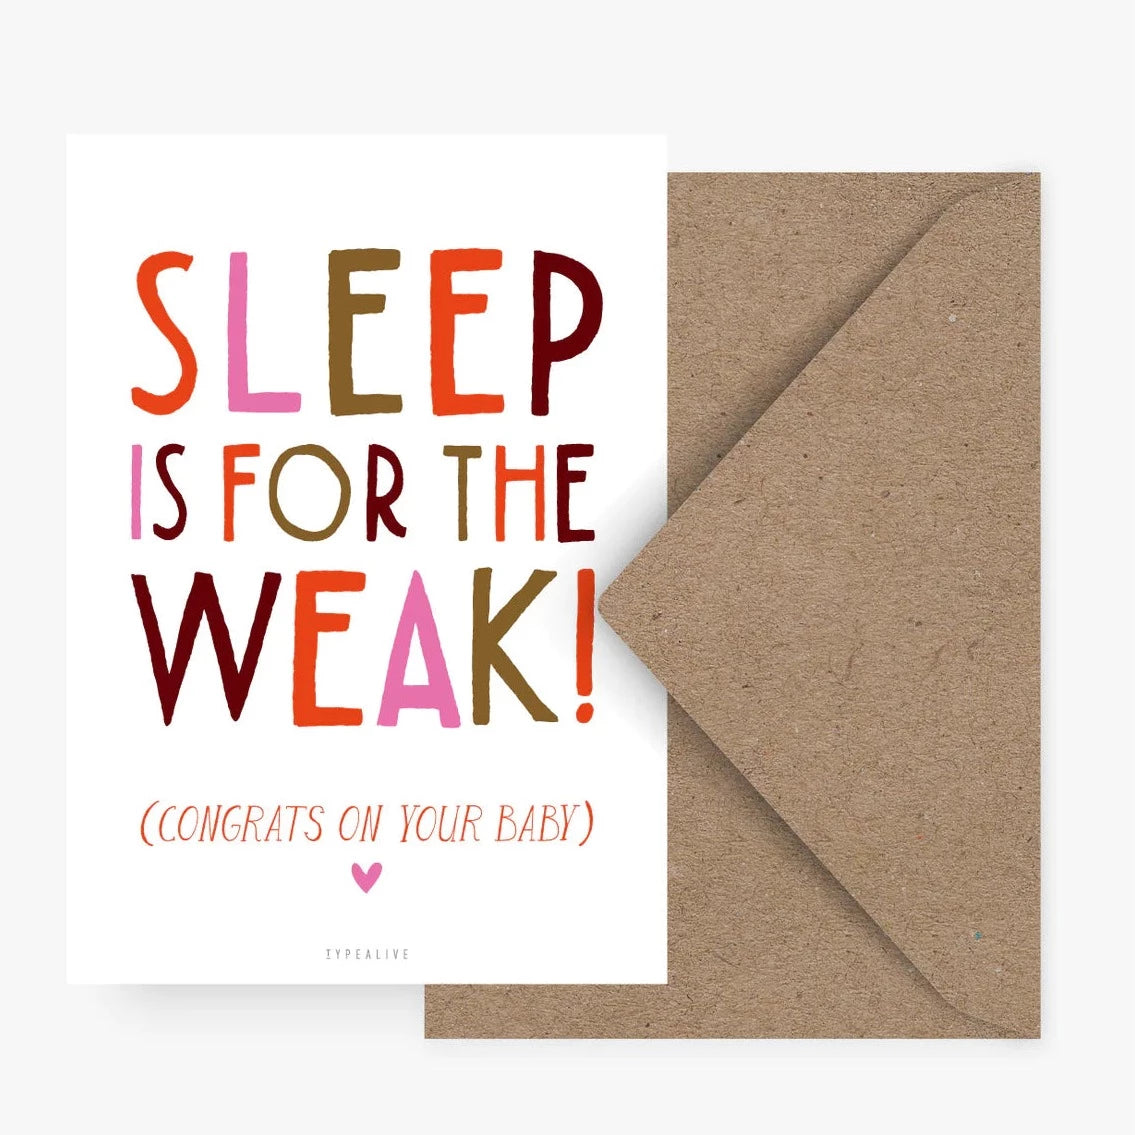 Sleep is for the weak - Glückwunschkarte